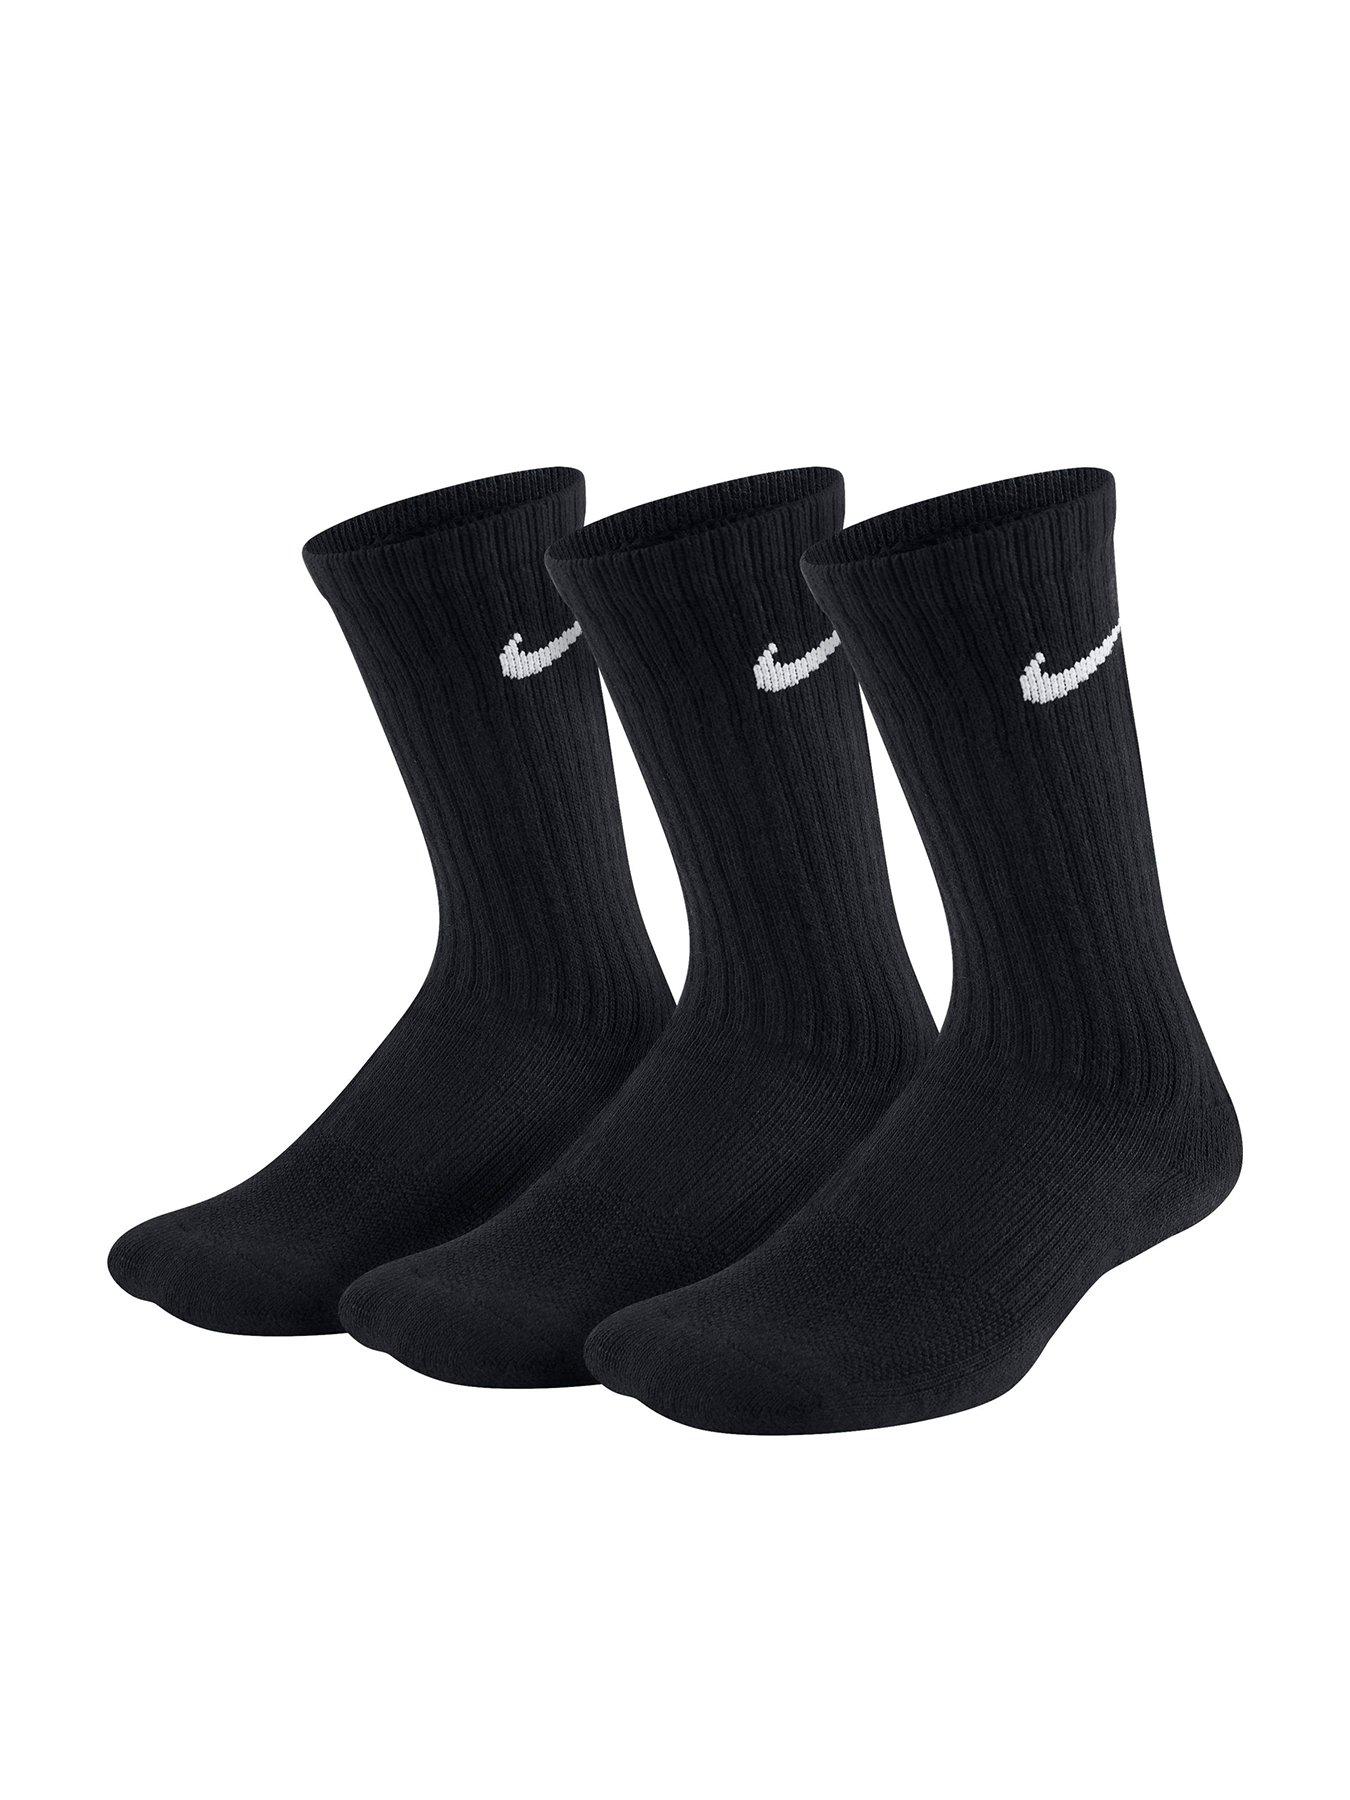 Nike Childrens 3 Pack Performance Socks - Black | very.co.uk